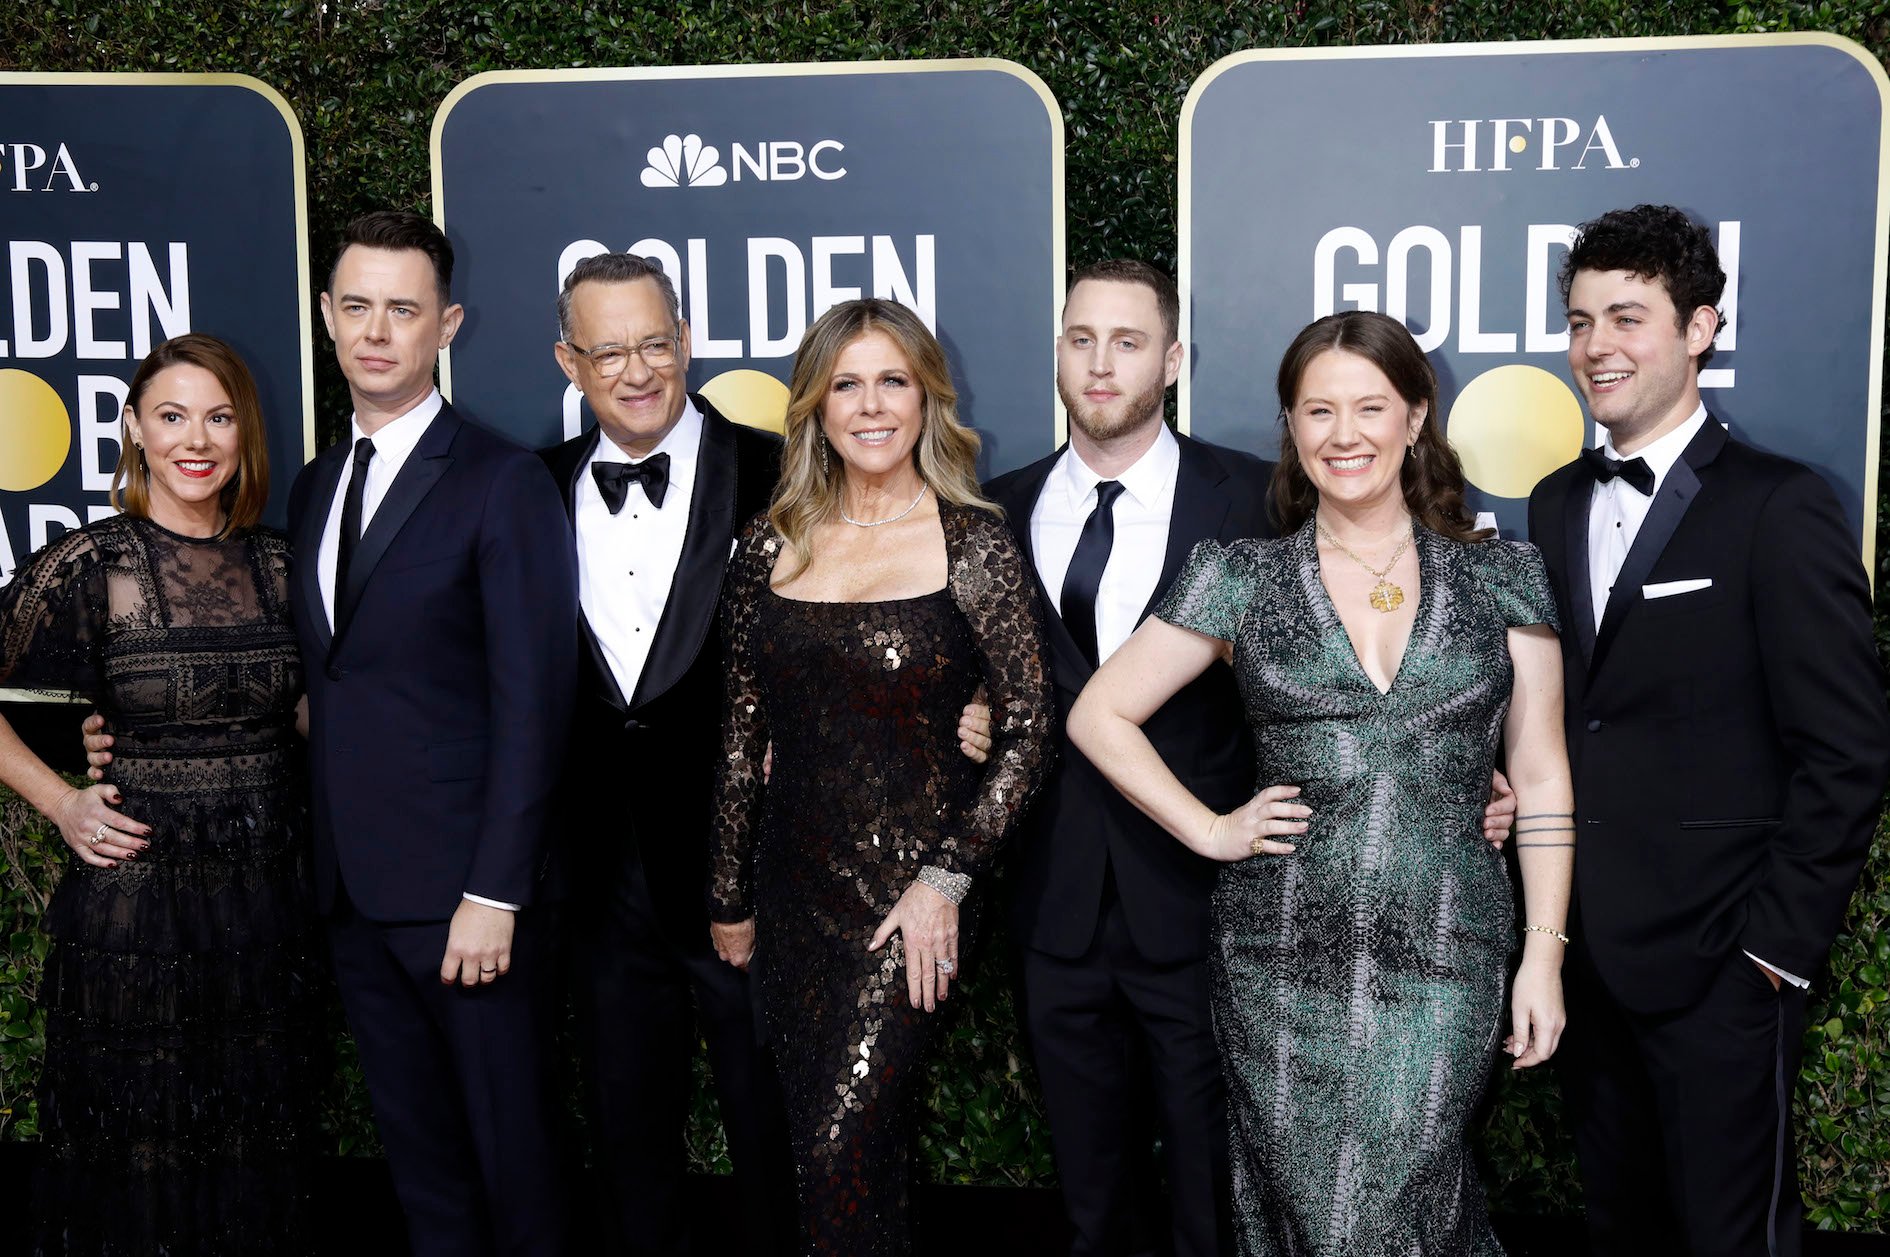 Samantha Bryant, Colin Hanks, Rita Wilson, Tom Hanks, Elizabeth Ann Hanks, Chet Hanks, and Truman Theodore Hanks standing together on the red carpet